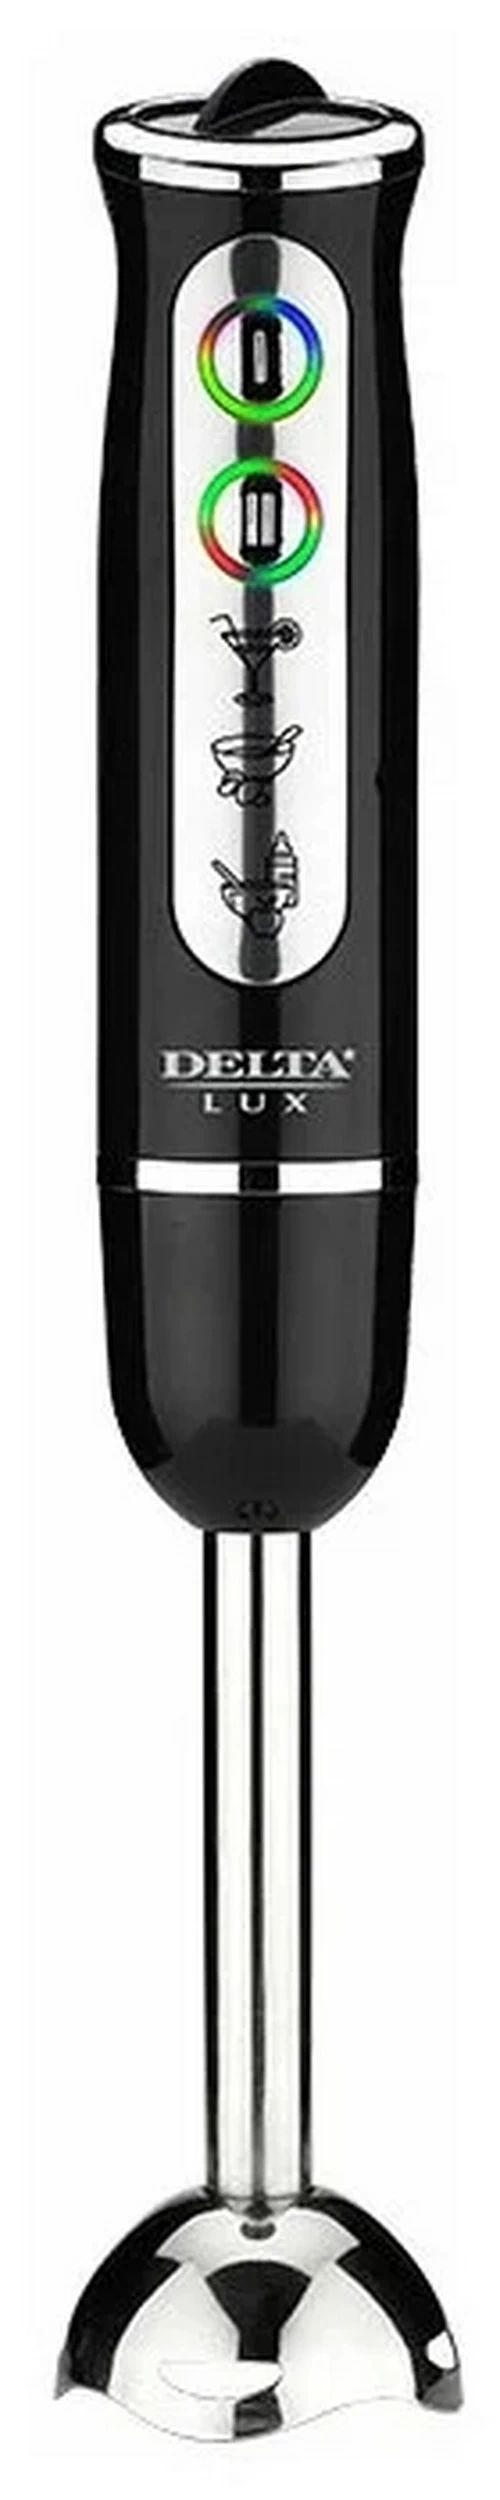 Погружной блендер Delta Lux DL-7039 черный погружной блендер delta lux dl 7039b red